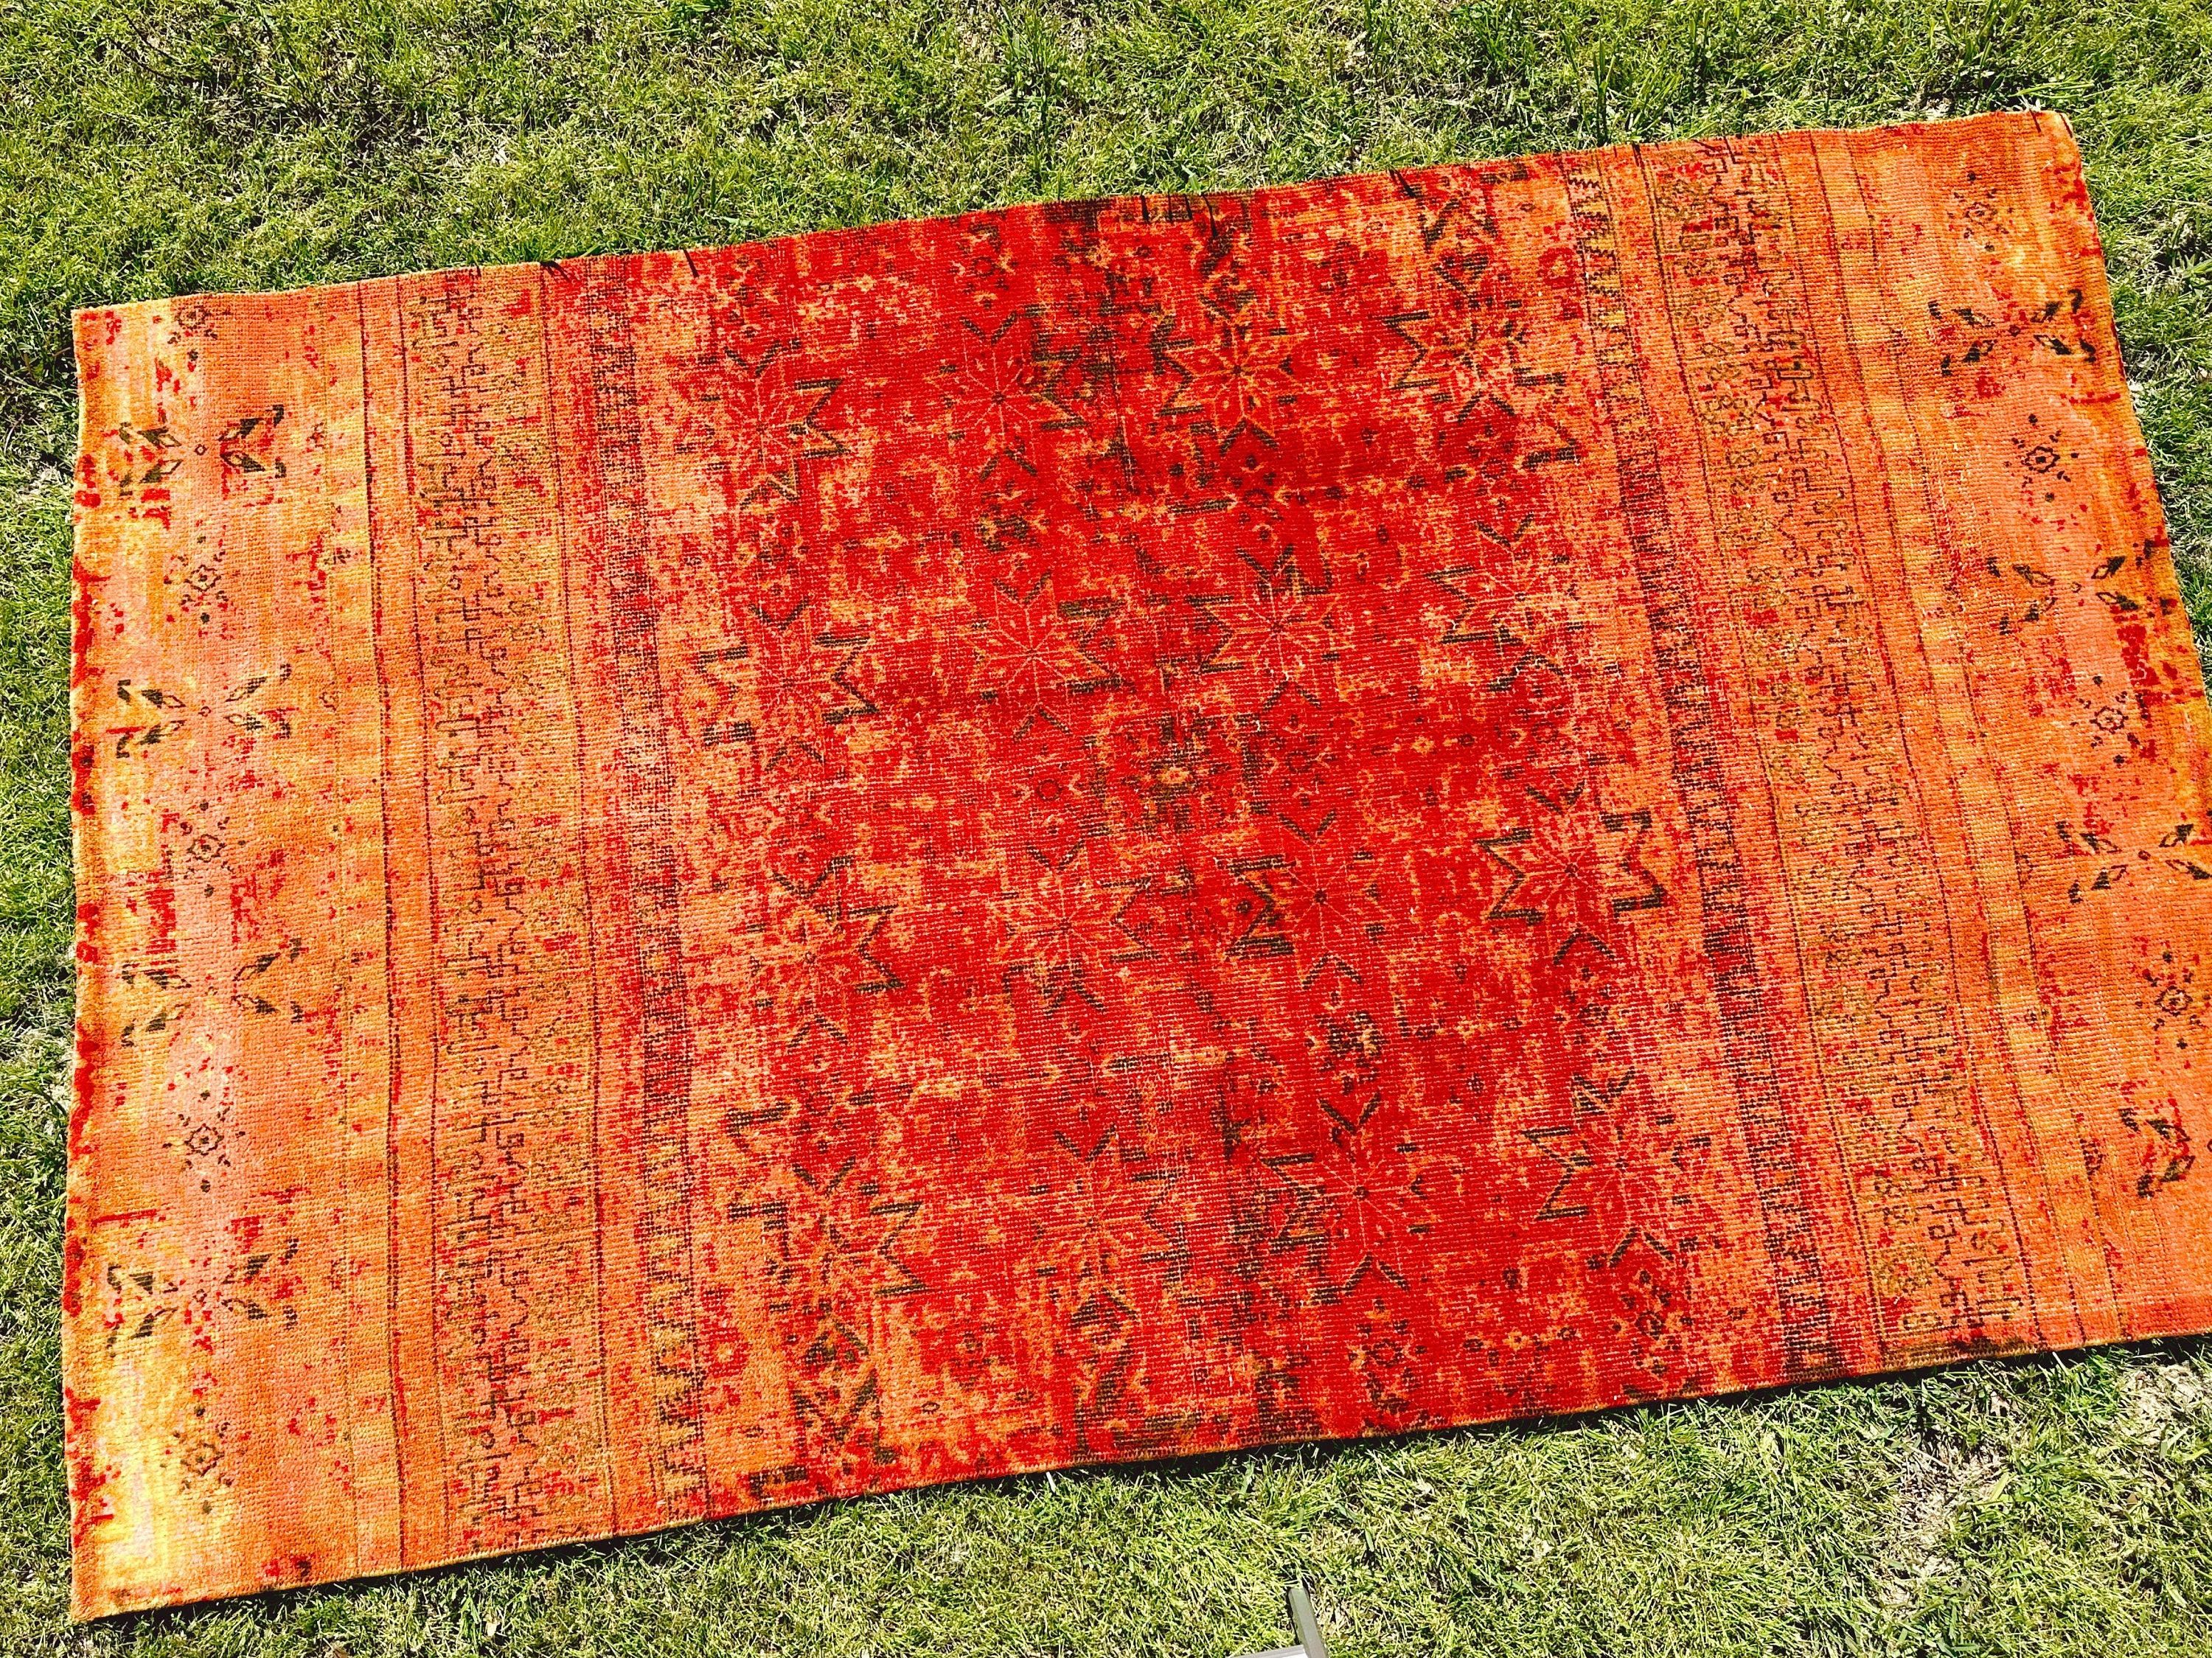 Vintage Inspired Wool Rug in Red and Orange Gradient 8x4.5 ft | Boho Chic Modern Multicolor Geometric Pattern Living Room Area Rug